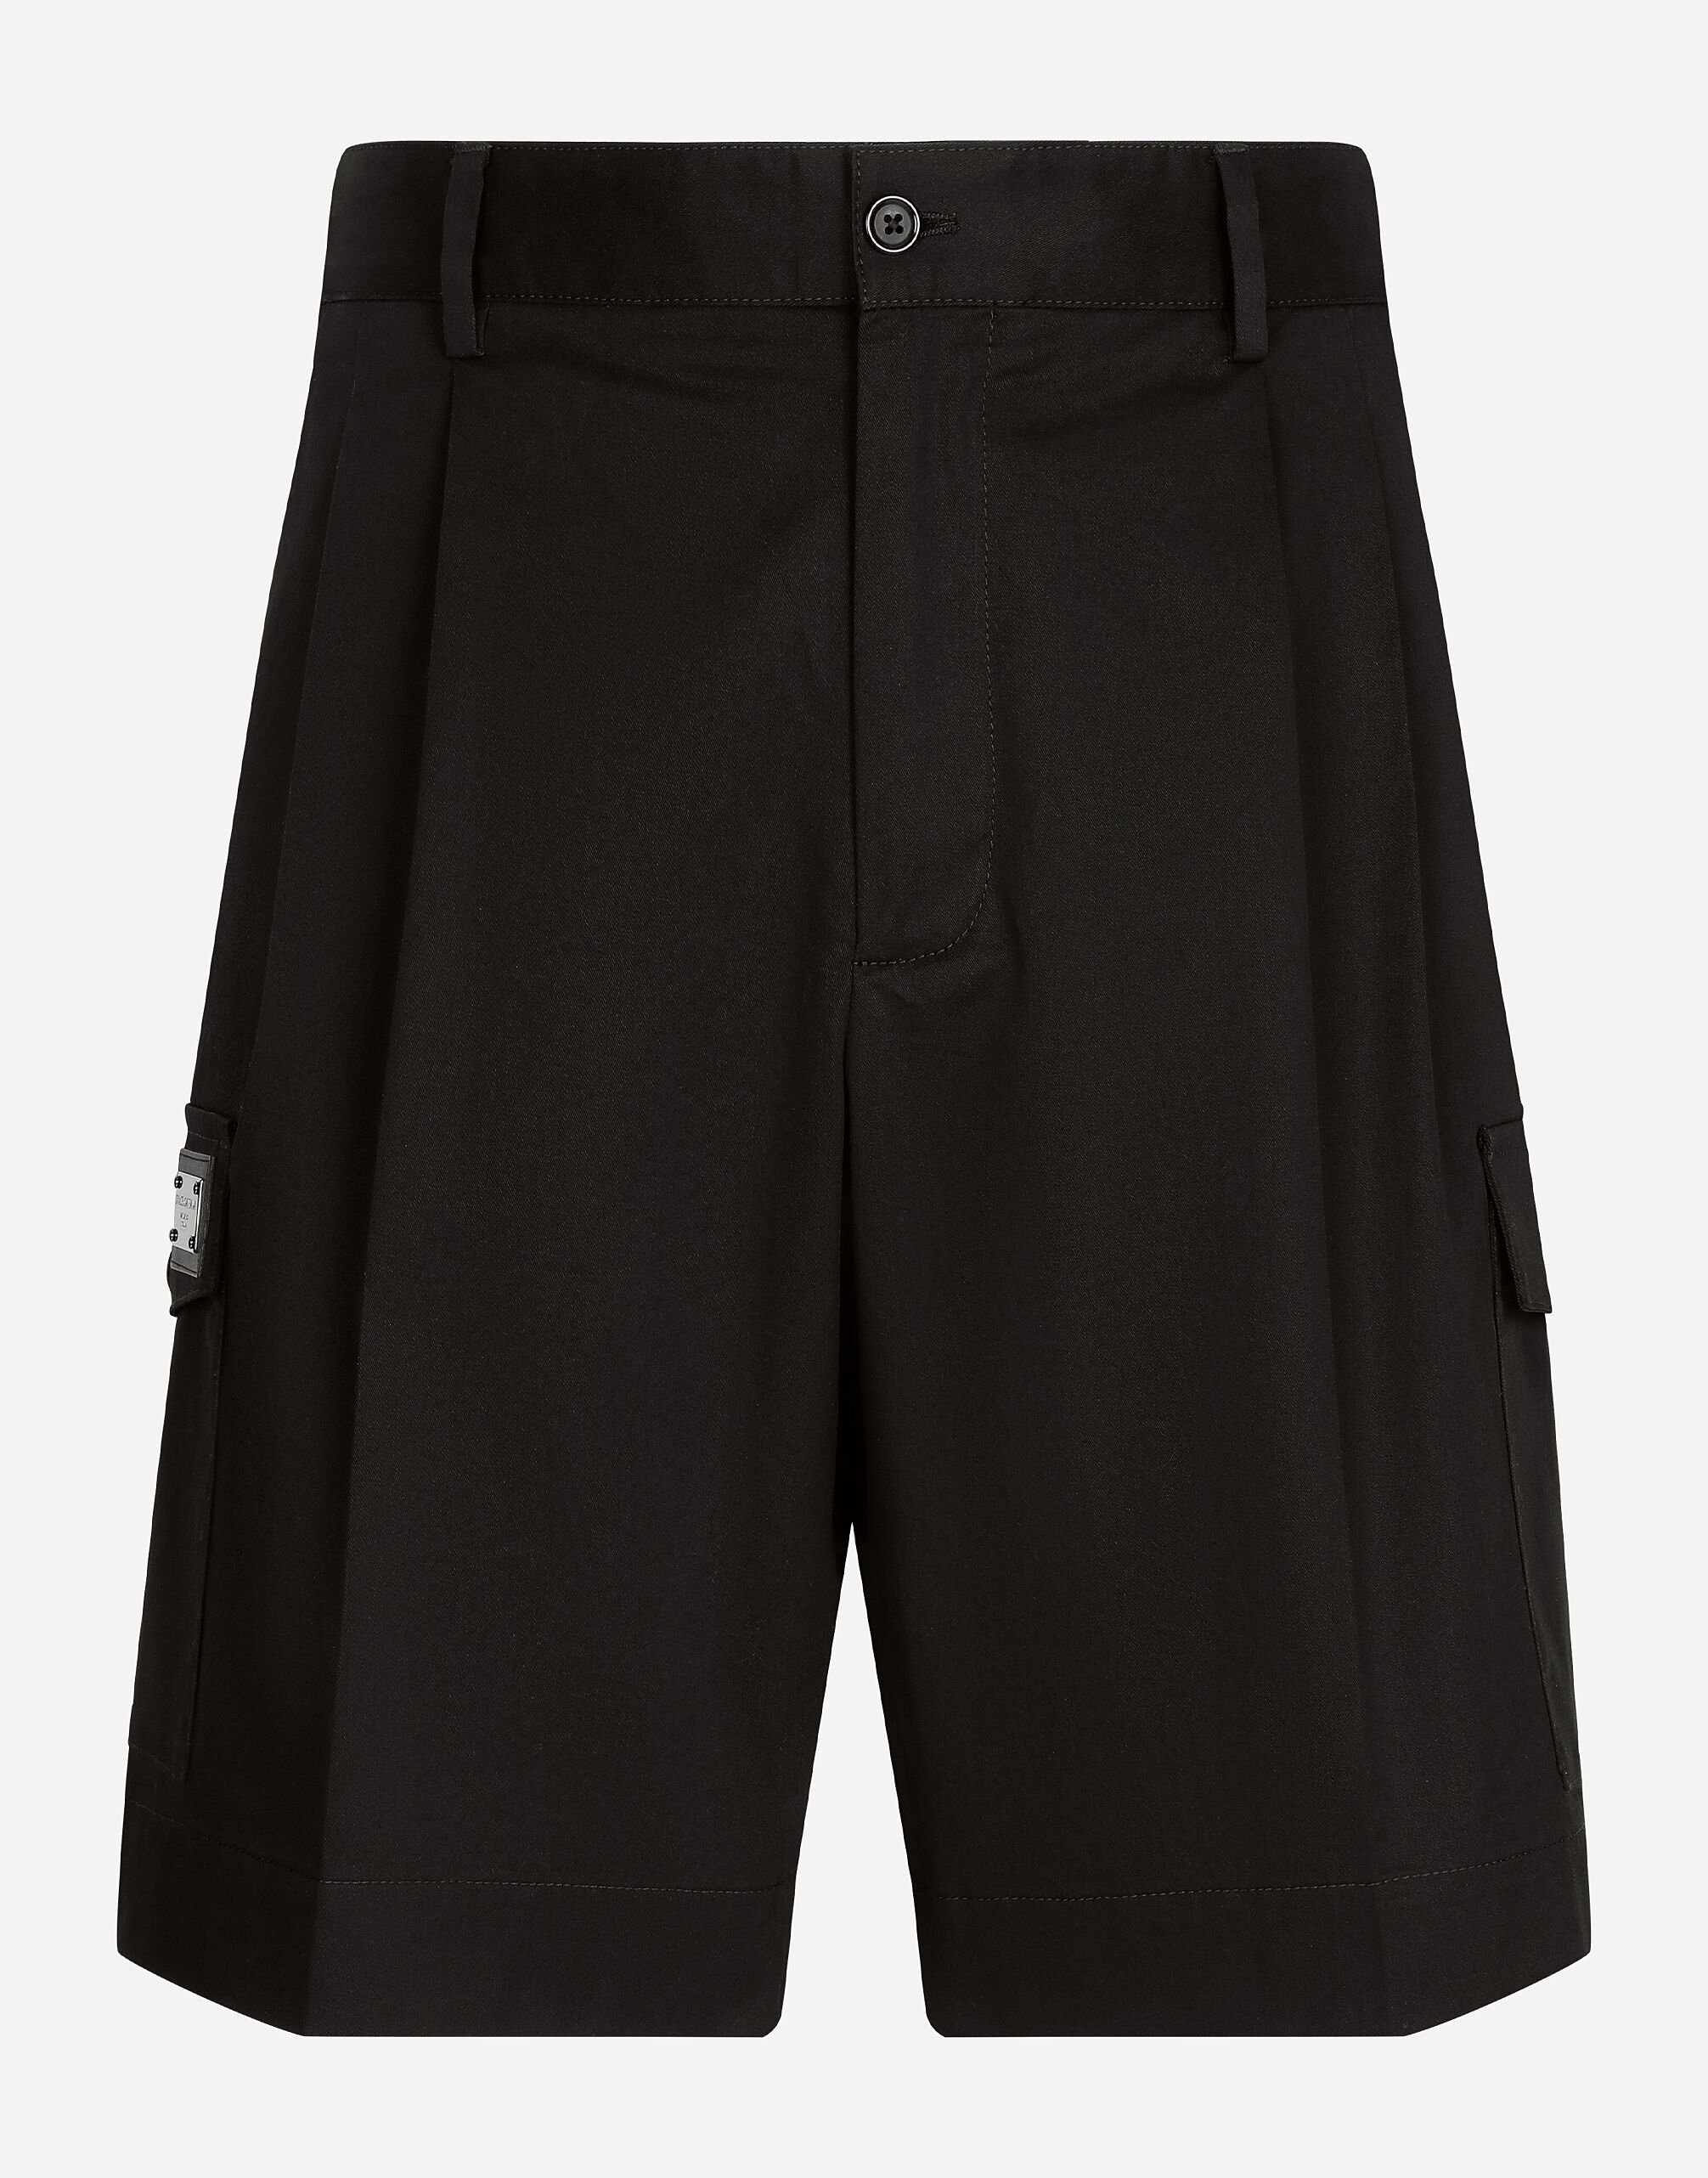 Dolce & Gabbana Stretch cotton gabardine cargo shorts with branded tag Print GW0MATHS5RU